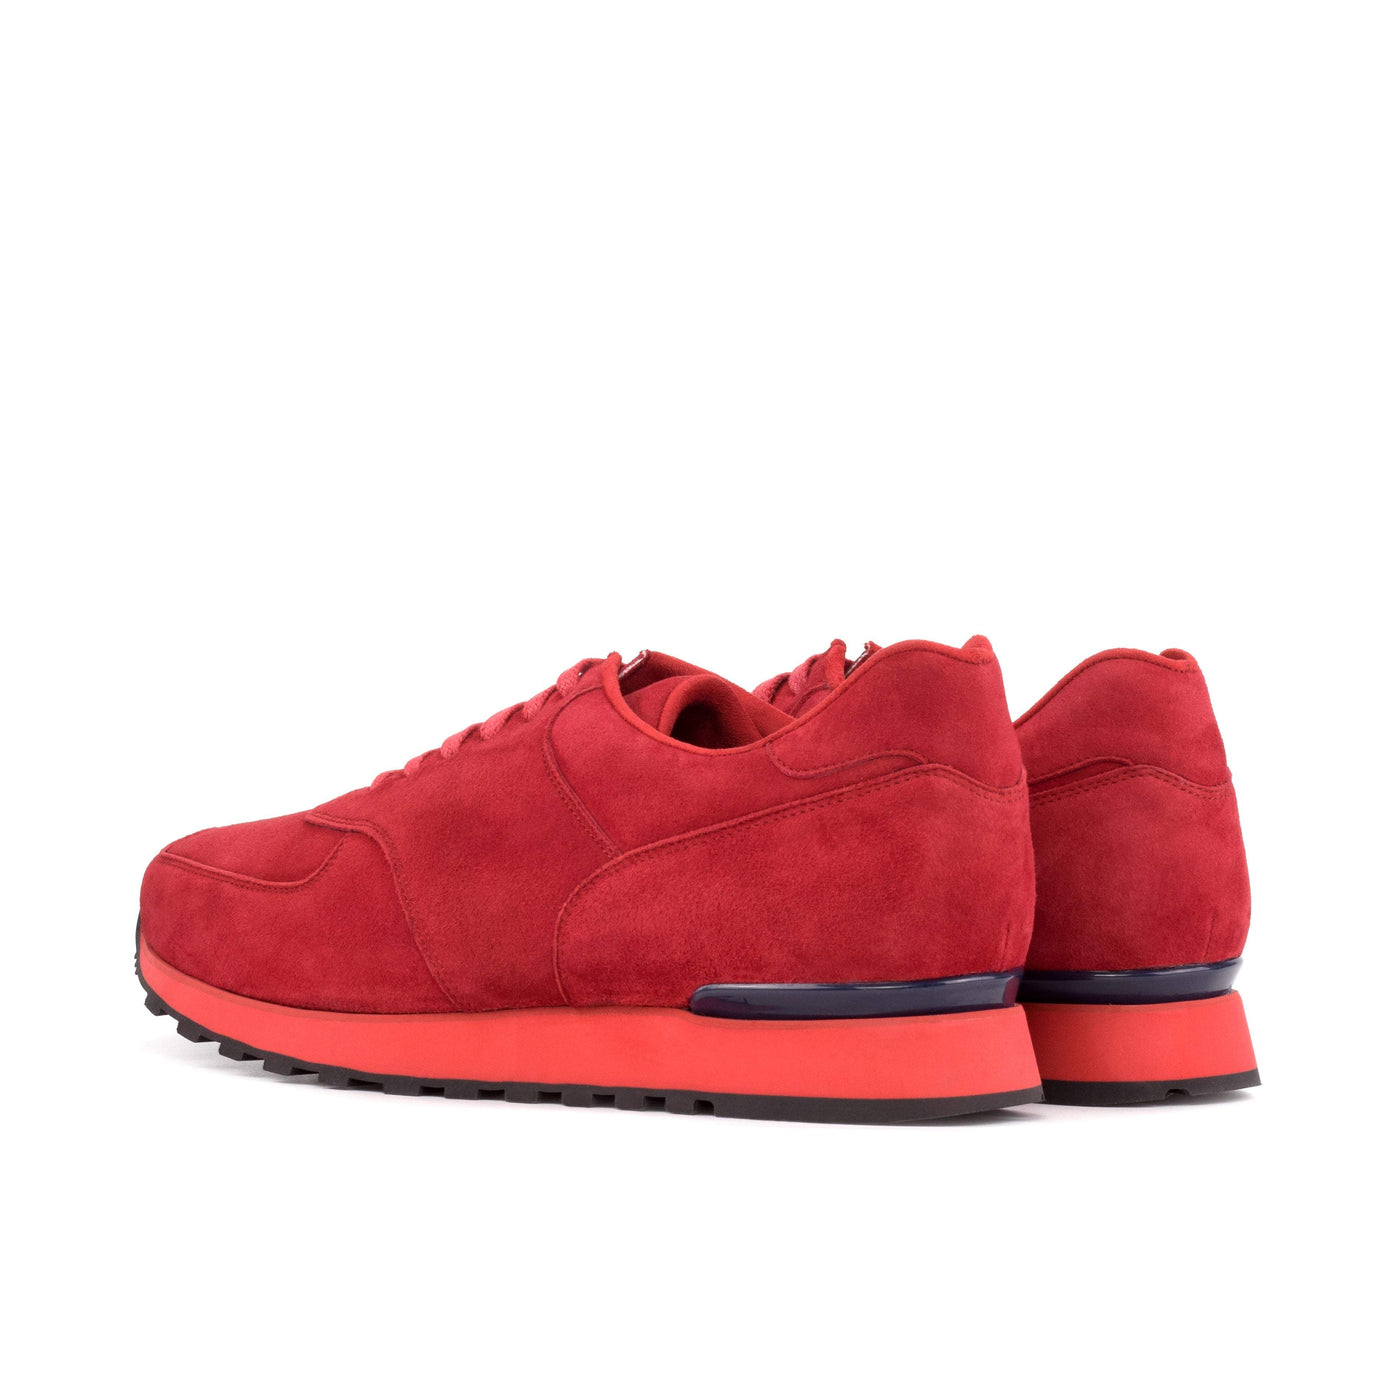 Men's Jogger Sneakers Leather Red 5721 4- MERRIMIUM